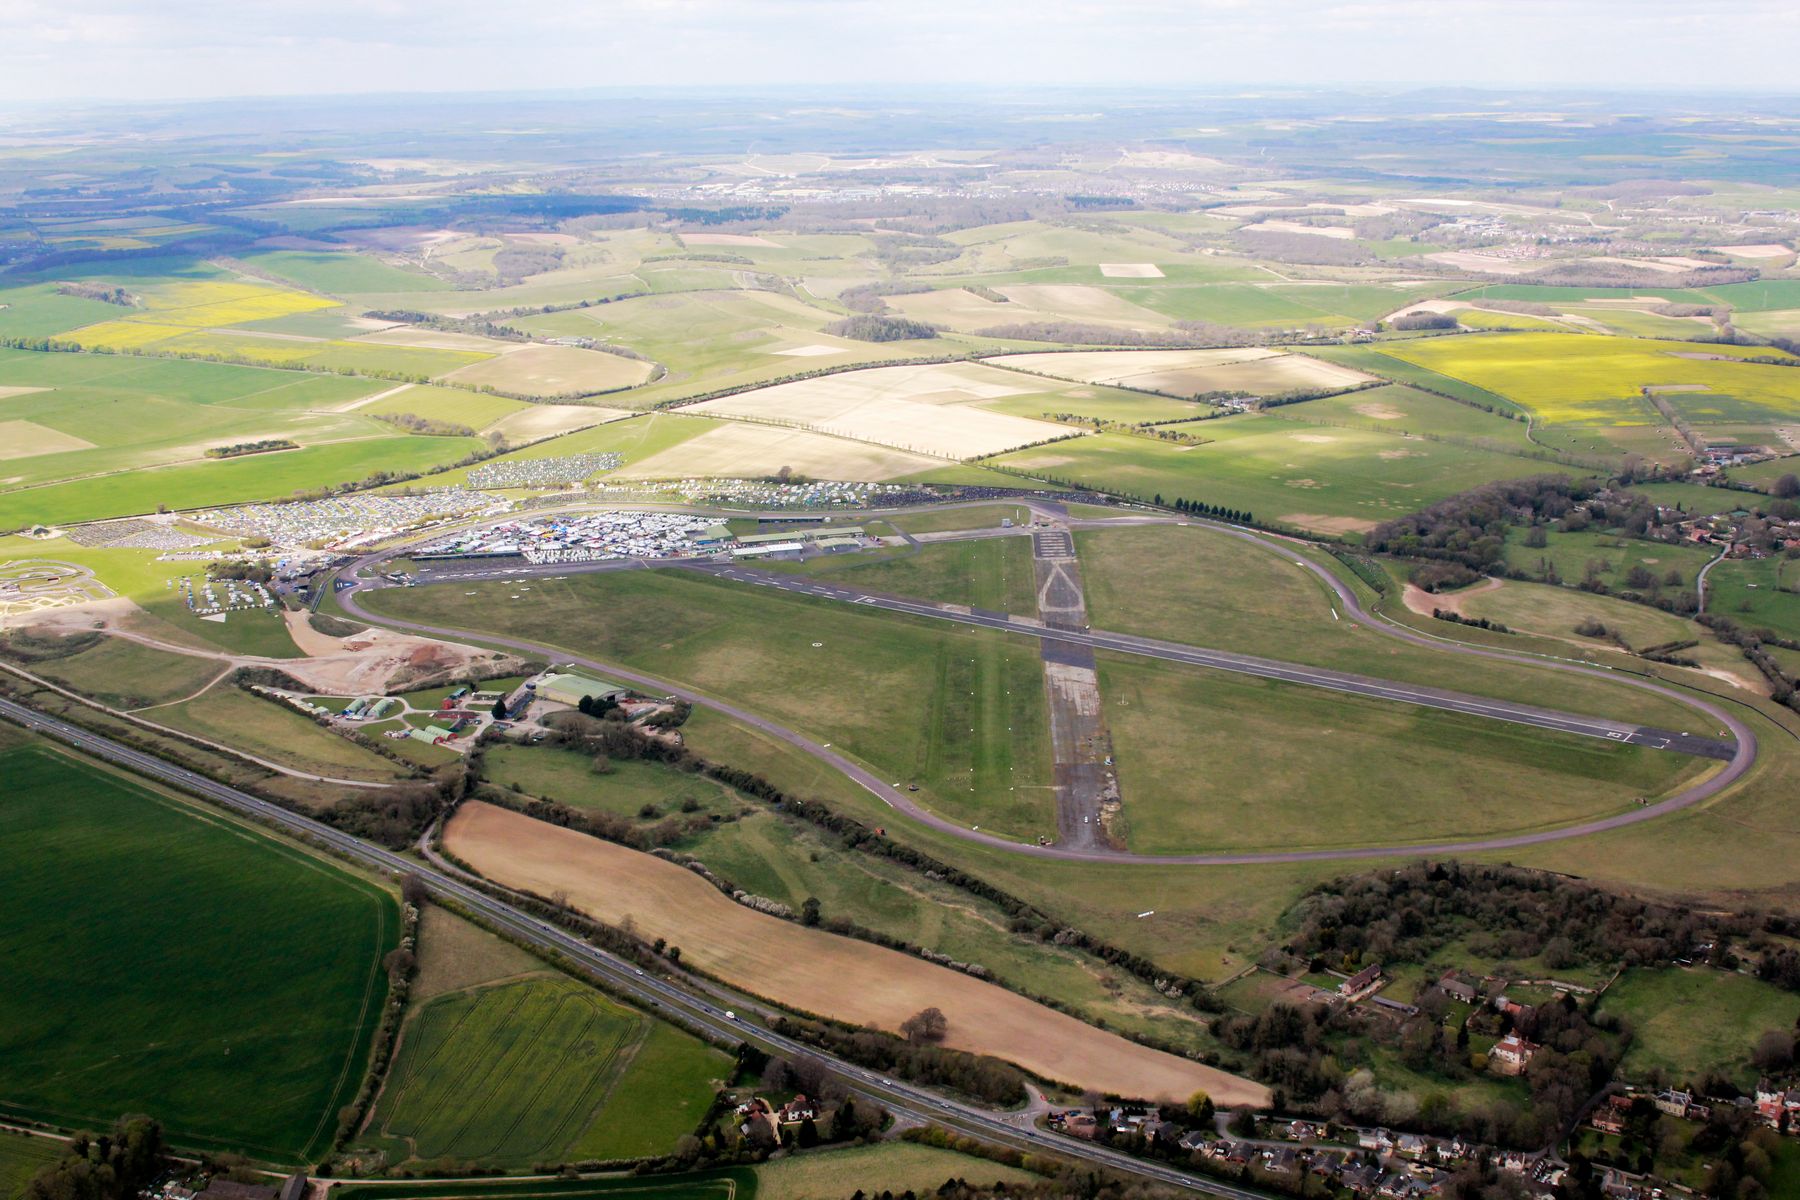 Aerial view of Thruxton Race Circuit